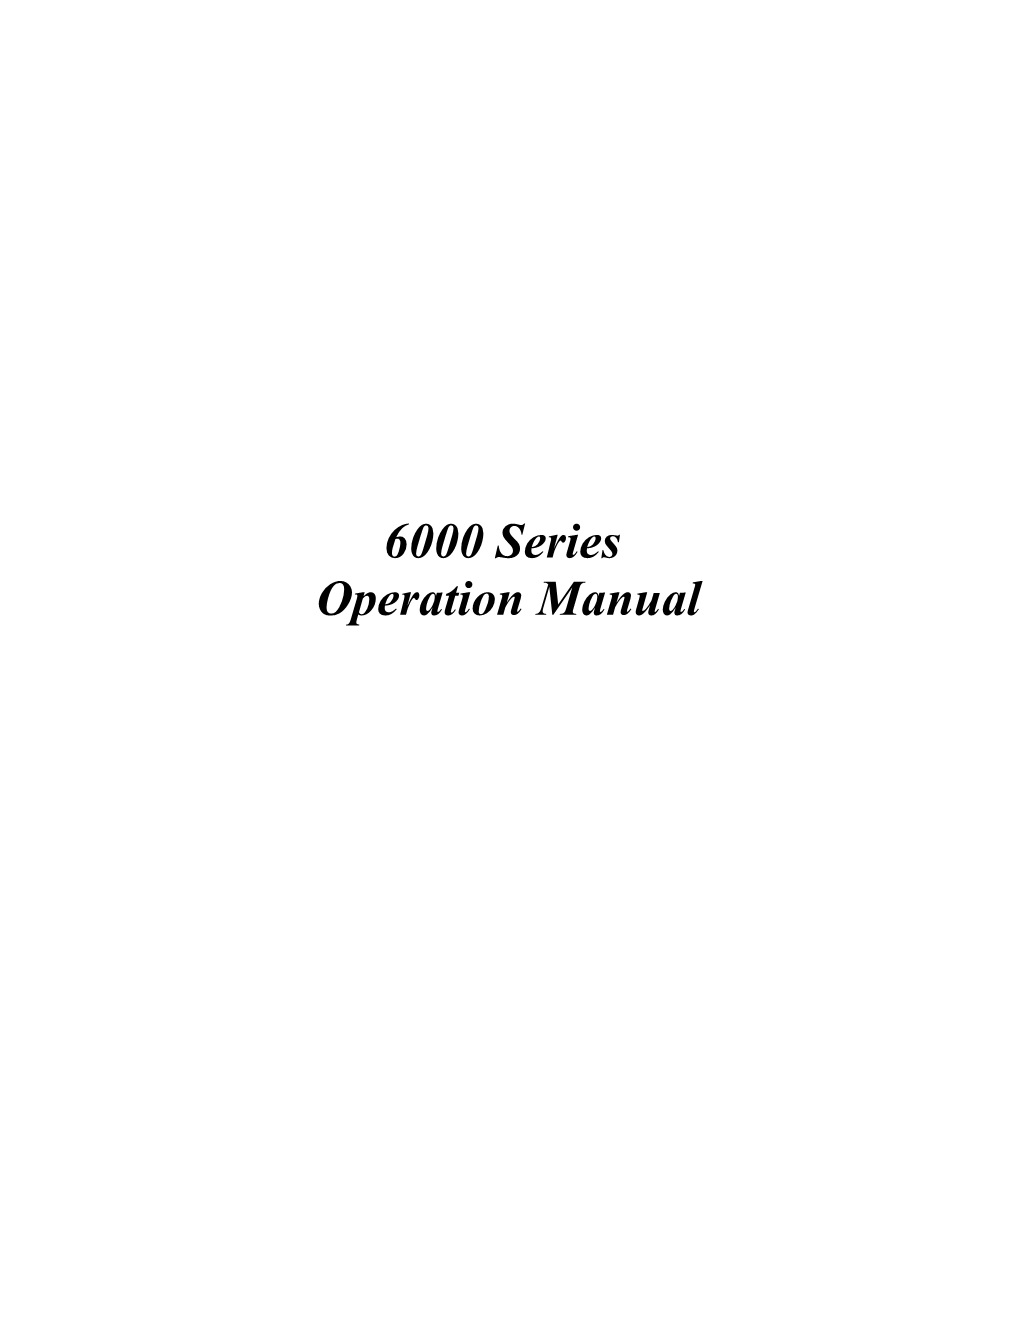 6000 Series Operation Manual